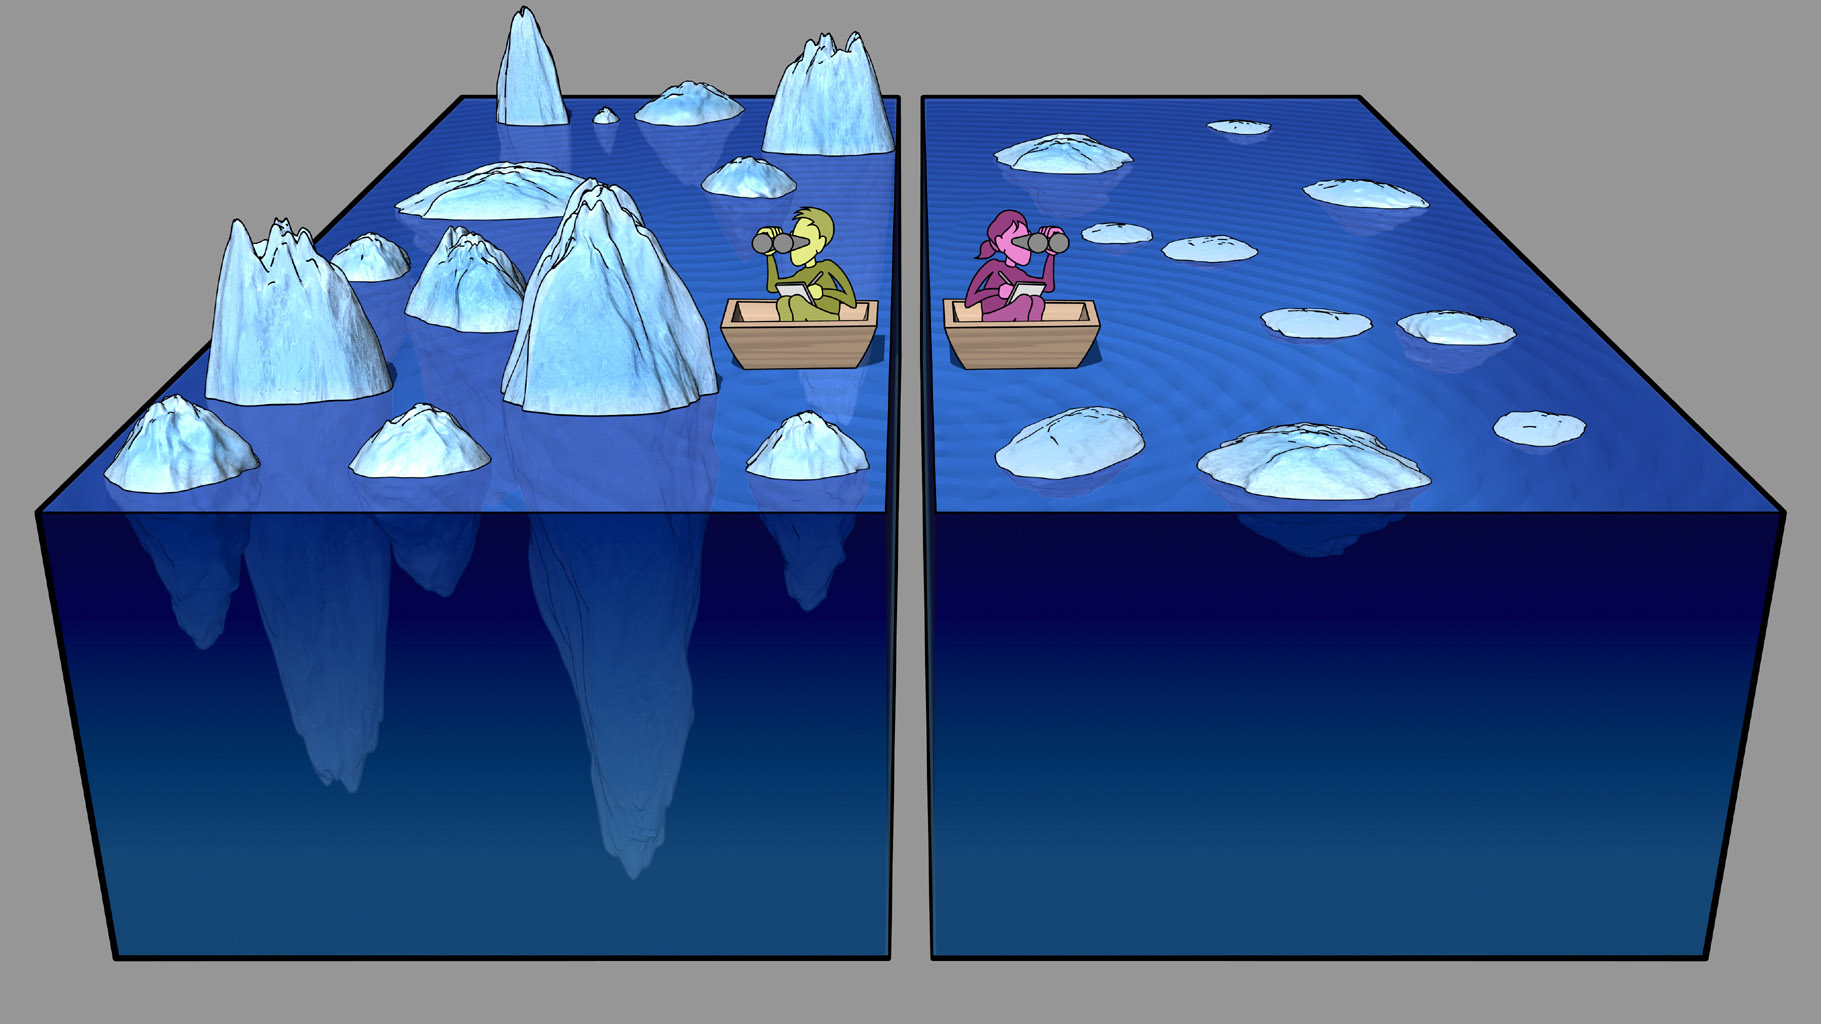 Icebergs demonstrating surface Endometriosis vs deep Endometriosis